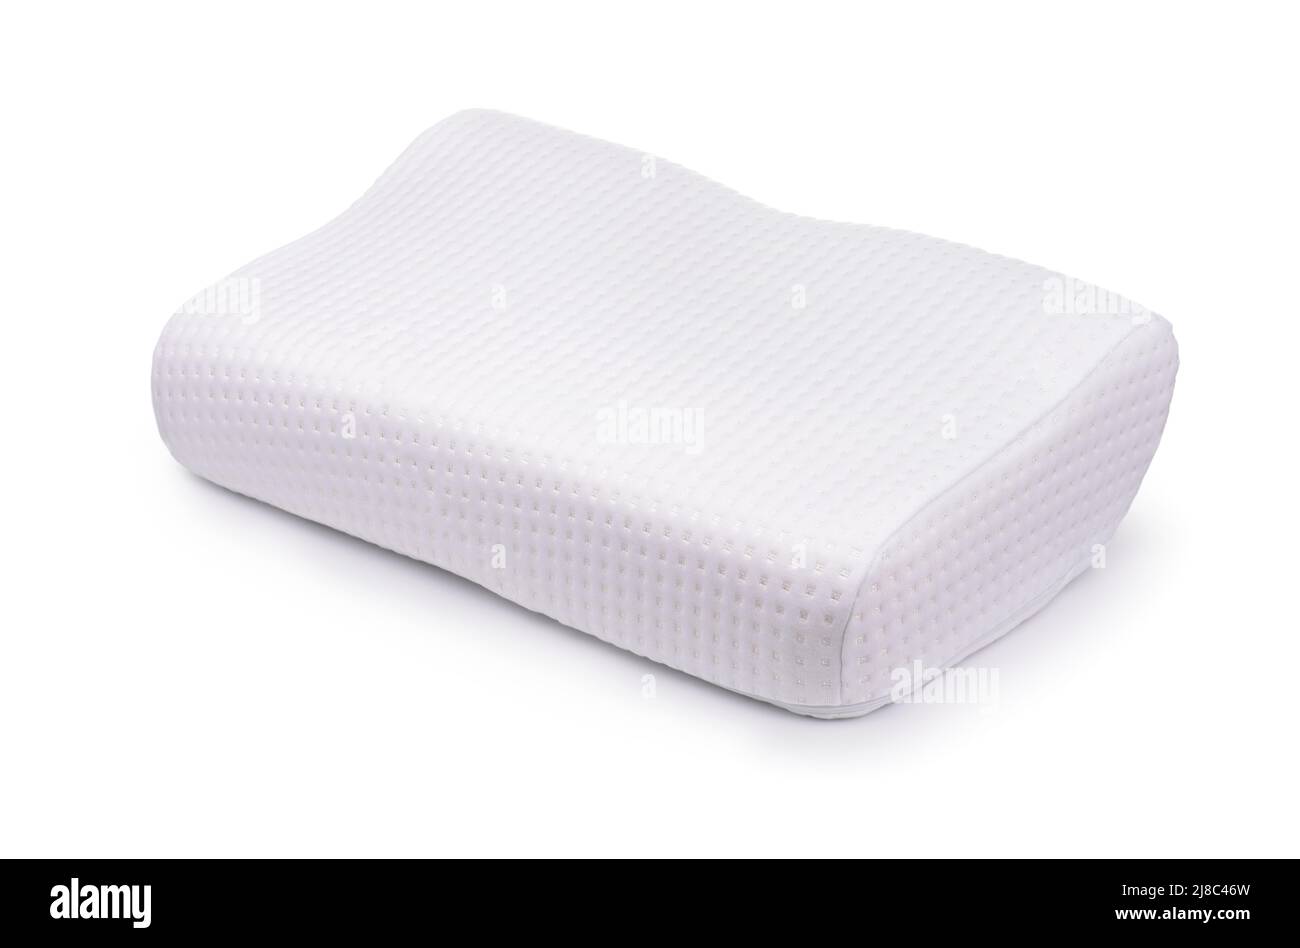 Orthopedic memory foam pillow isolated on white Stock Photo